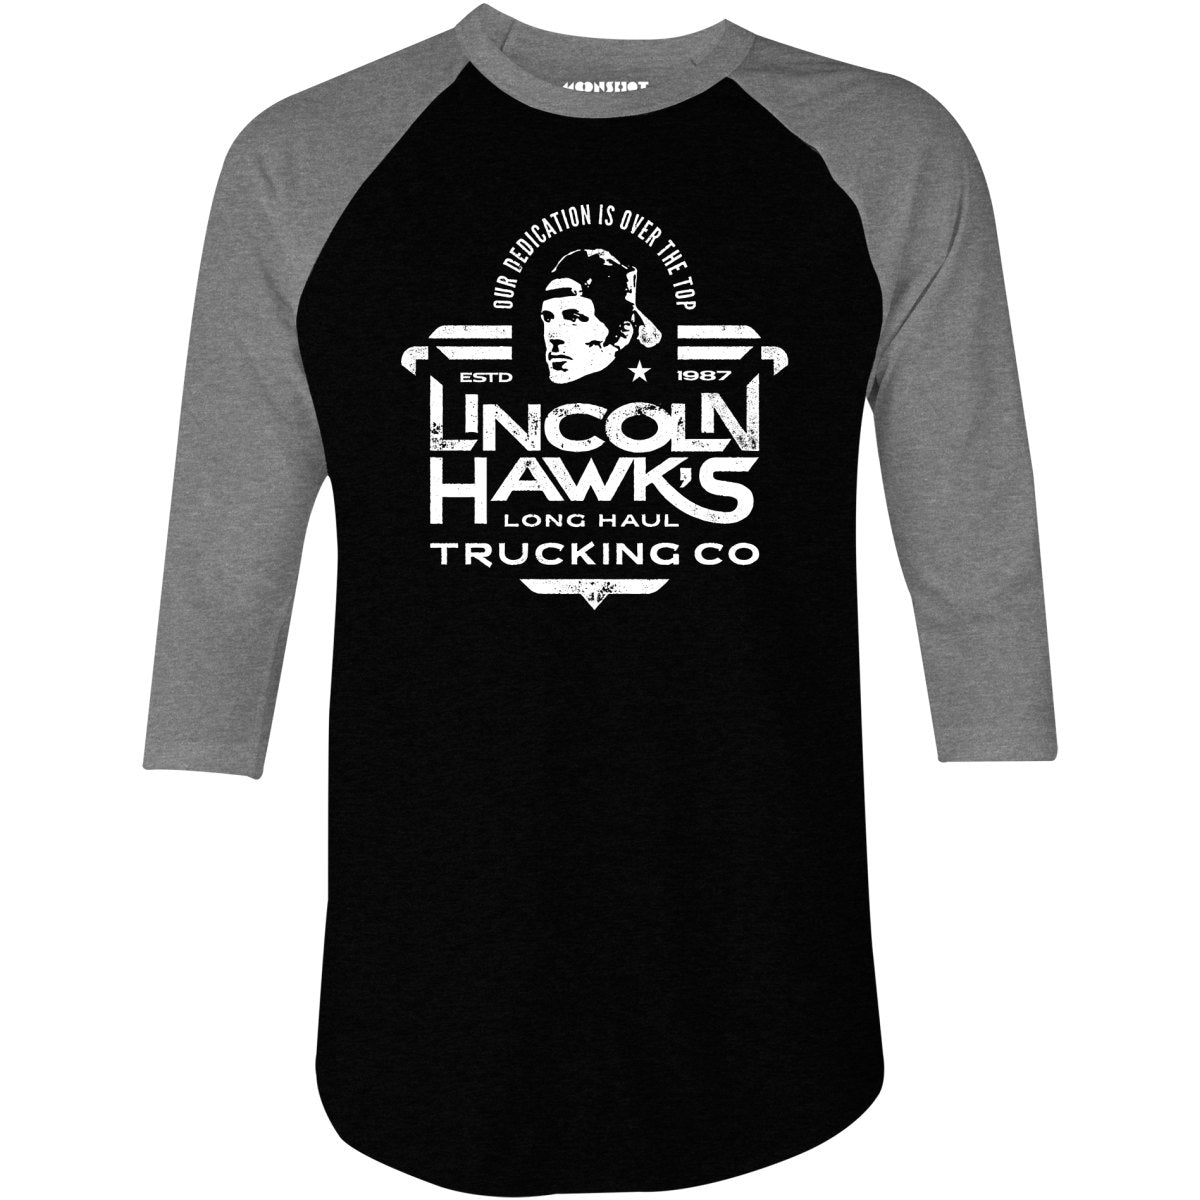 Lincoln Hawk's Trucking Co. - 3/4 Sleeve Raglan T-Shirt